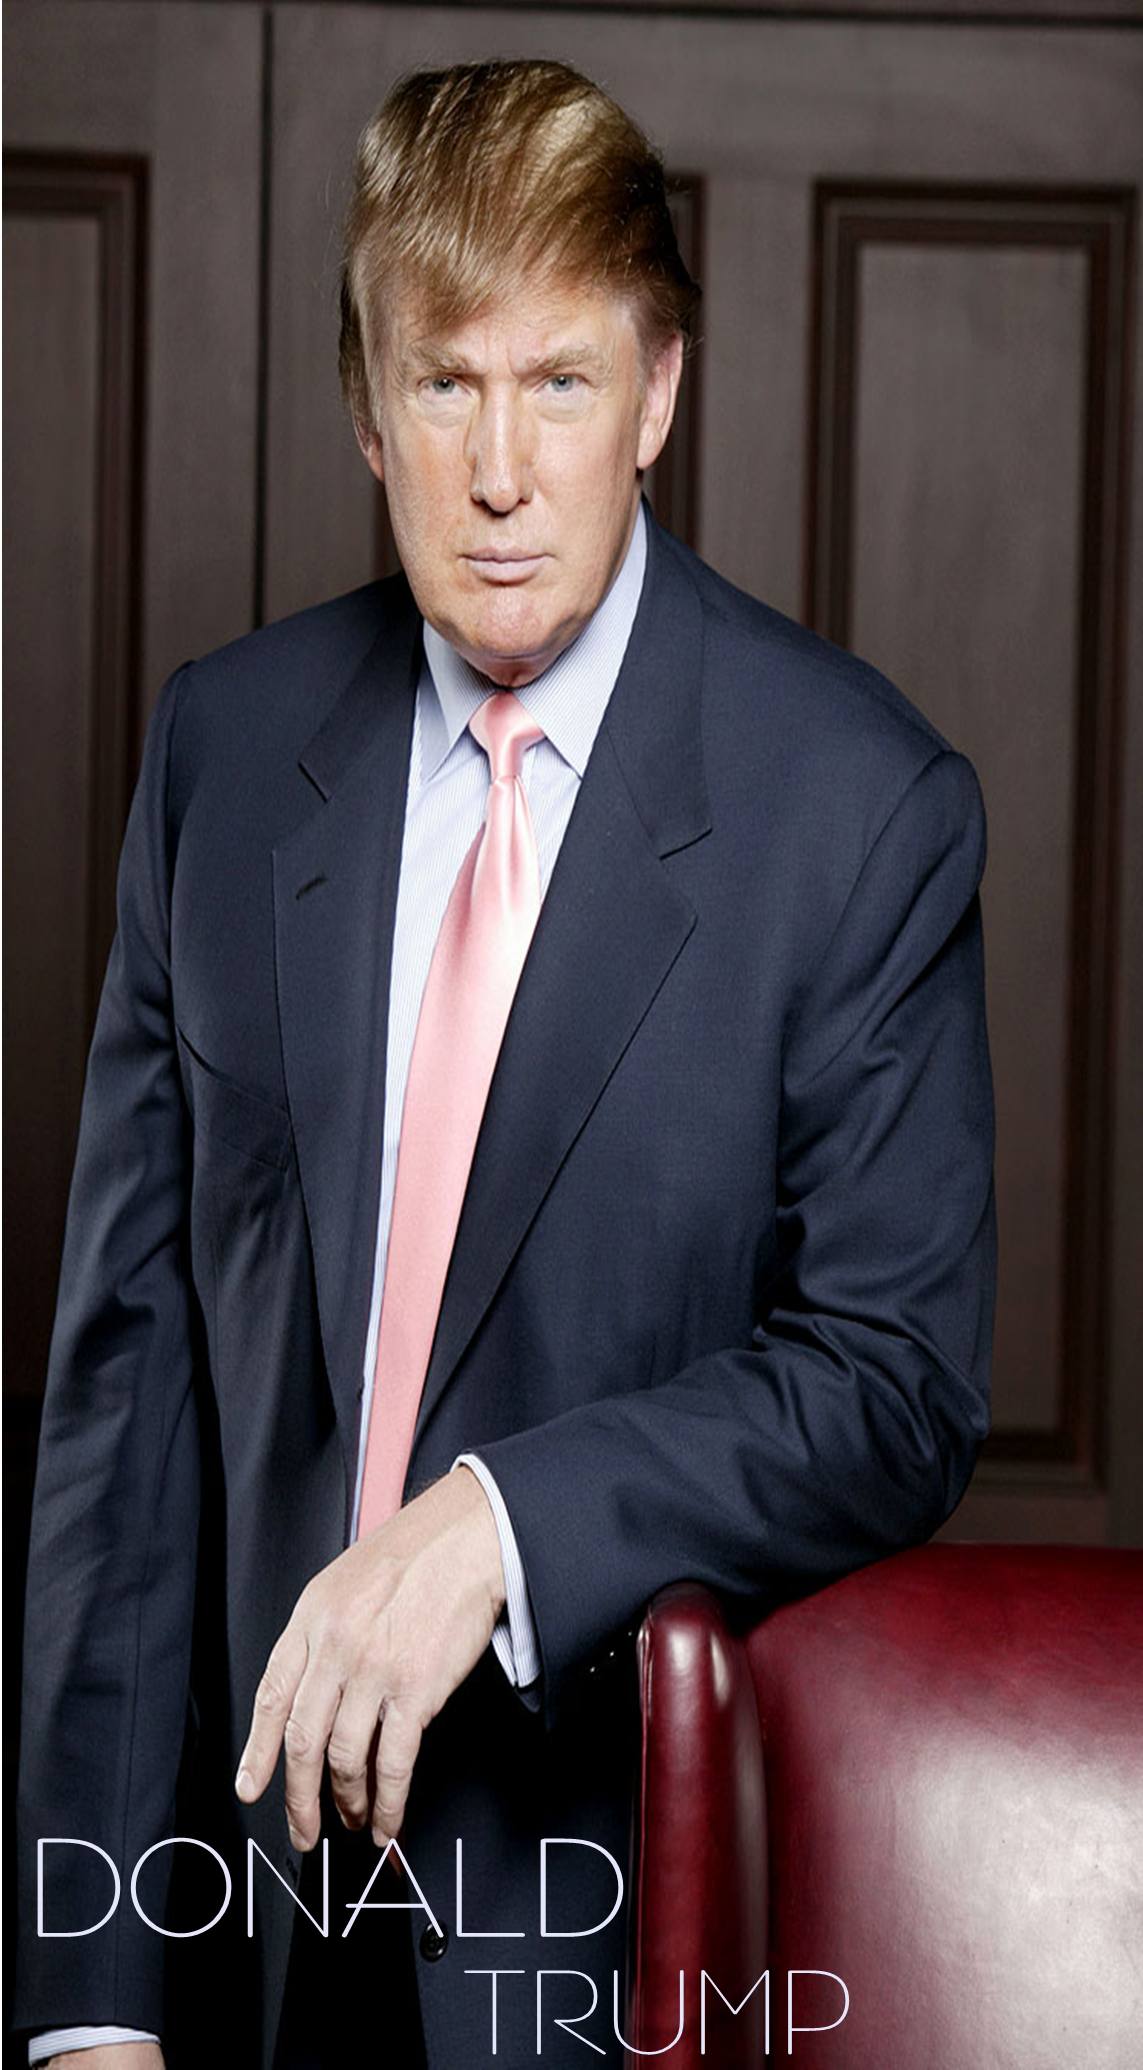 Donald Trump HD Wallpaper Image Pictures